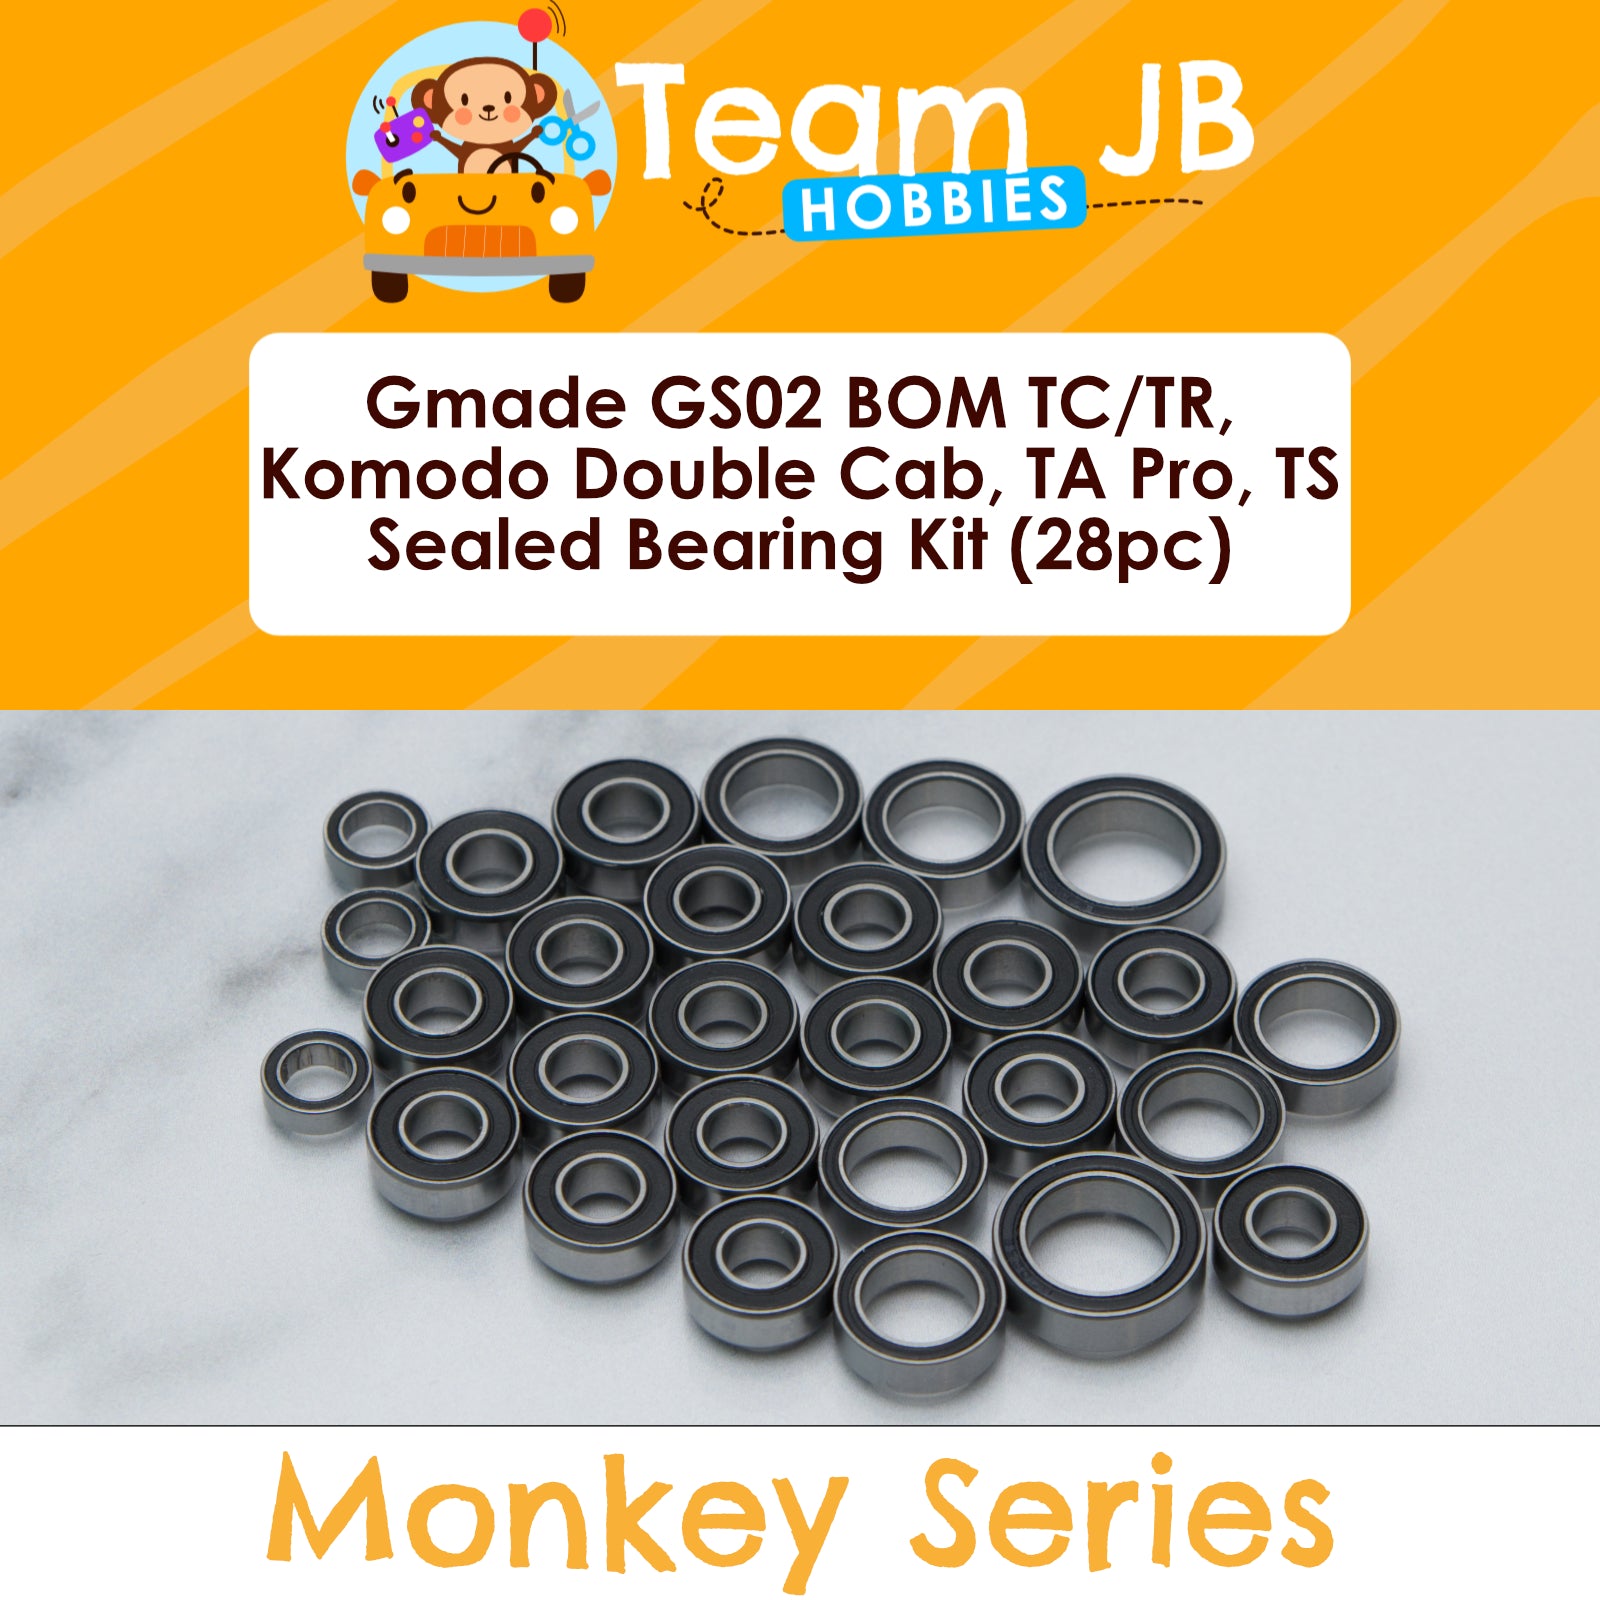 Gmade GS02 BOM TC/TR, Komodo Double Cab, TA Pro, TS - Sealed Bearing Kit